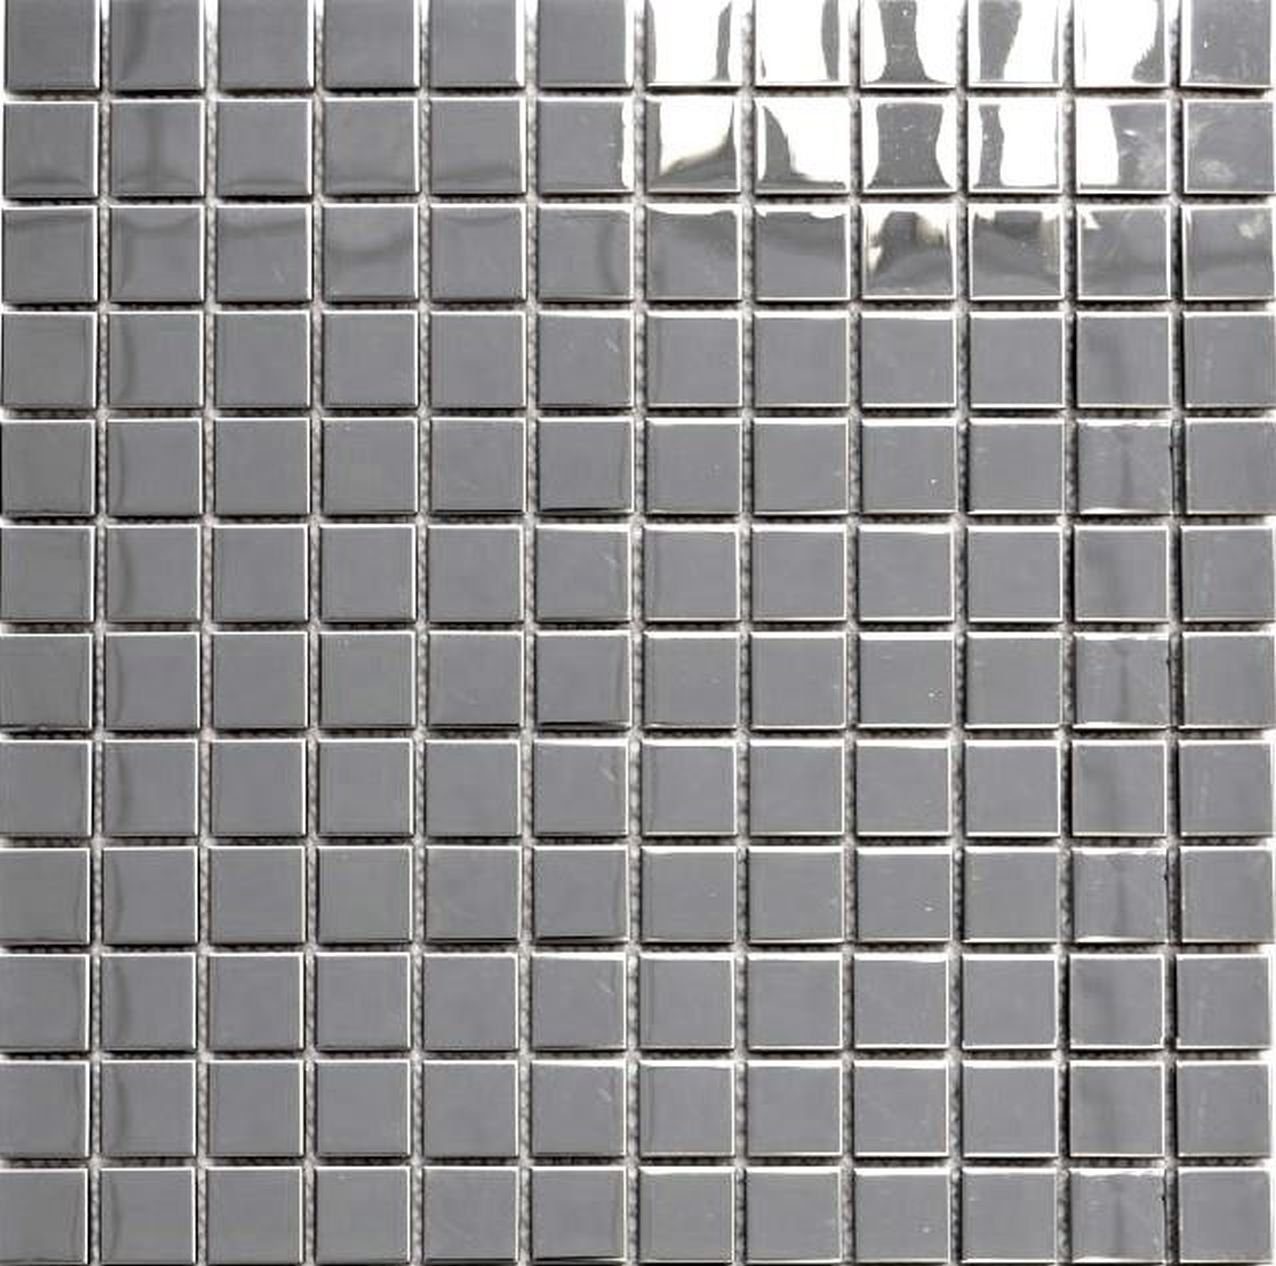 Mosani Mosaikfliesen Edelstahl Mosaik Fliesenspiegel glänzend Küchenwand silber Fliese